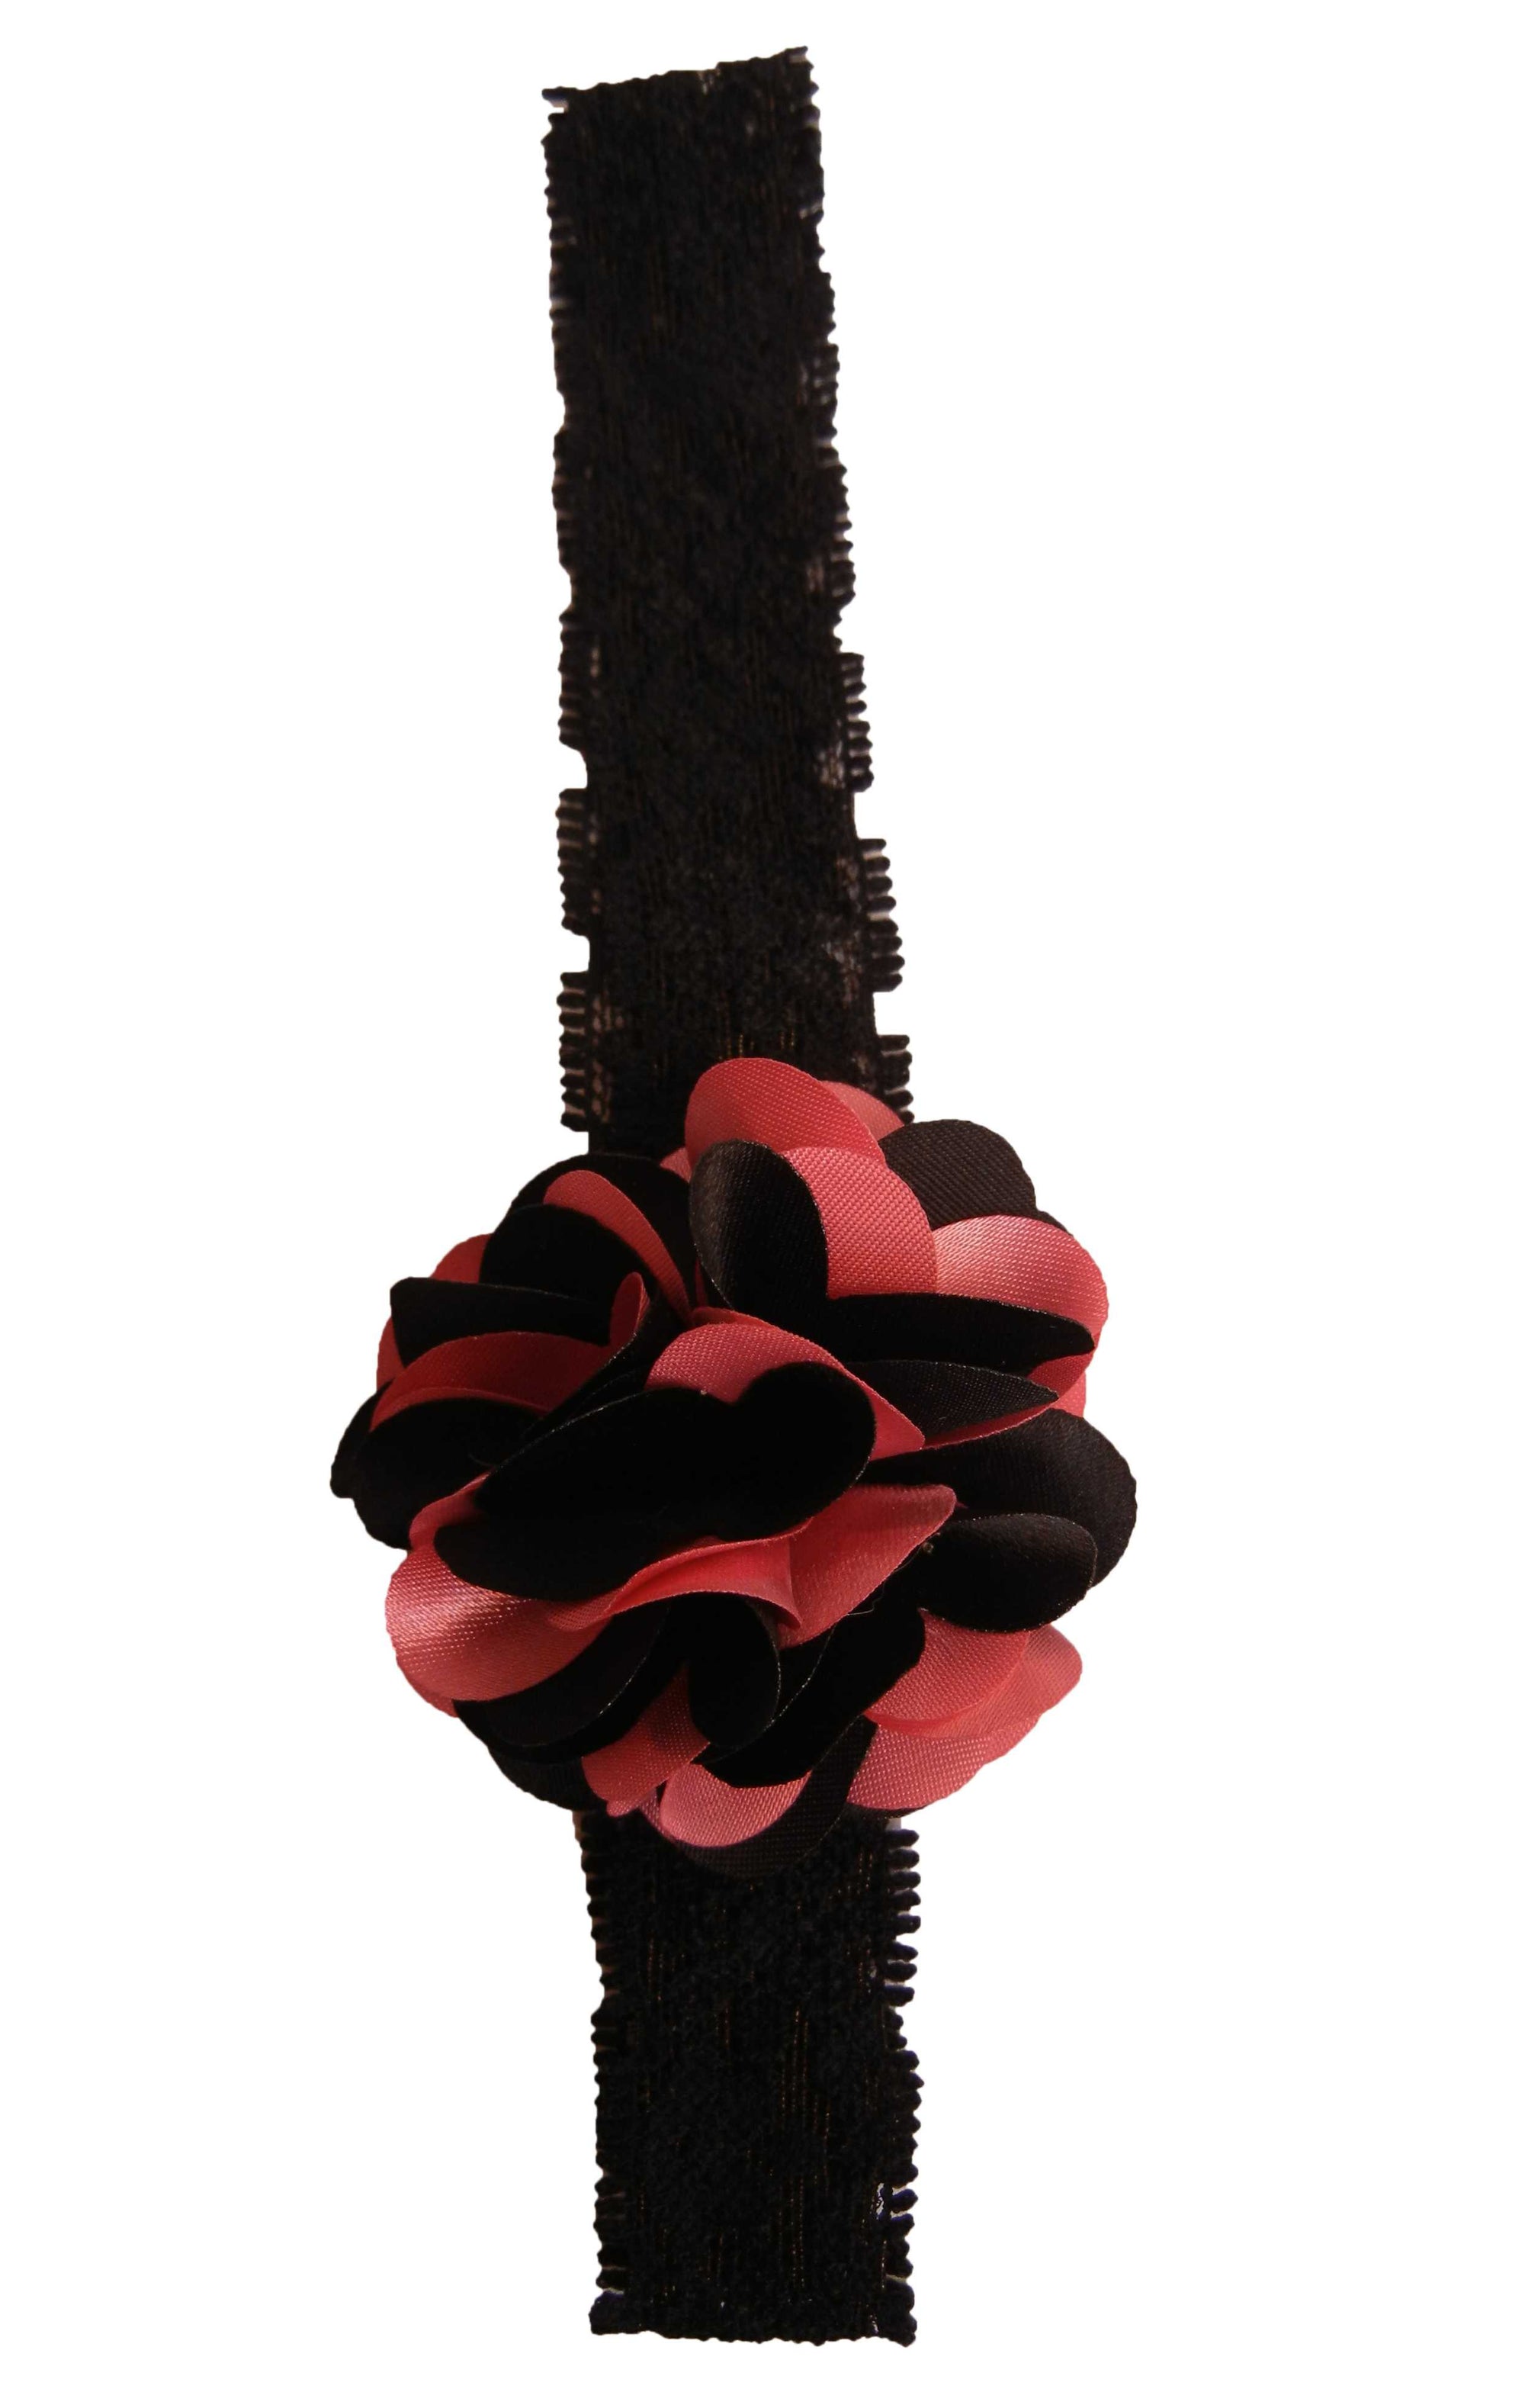 Onpink & Blk flower on Black Lace Hair Band for Kids